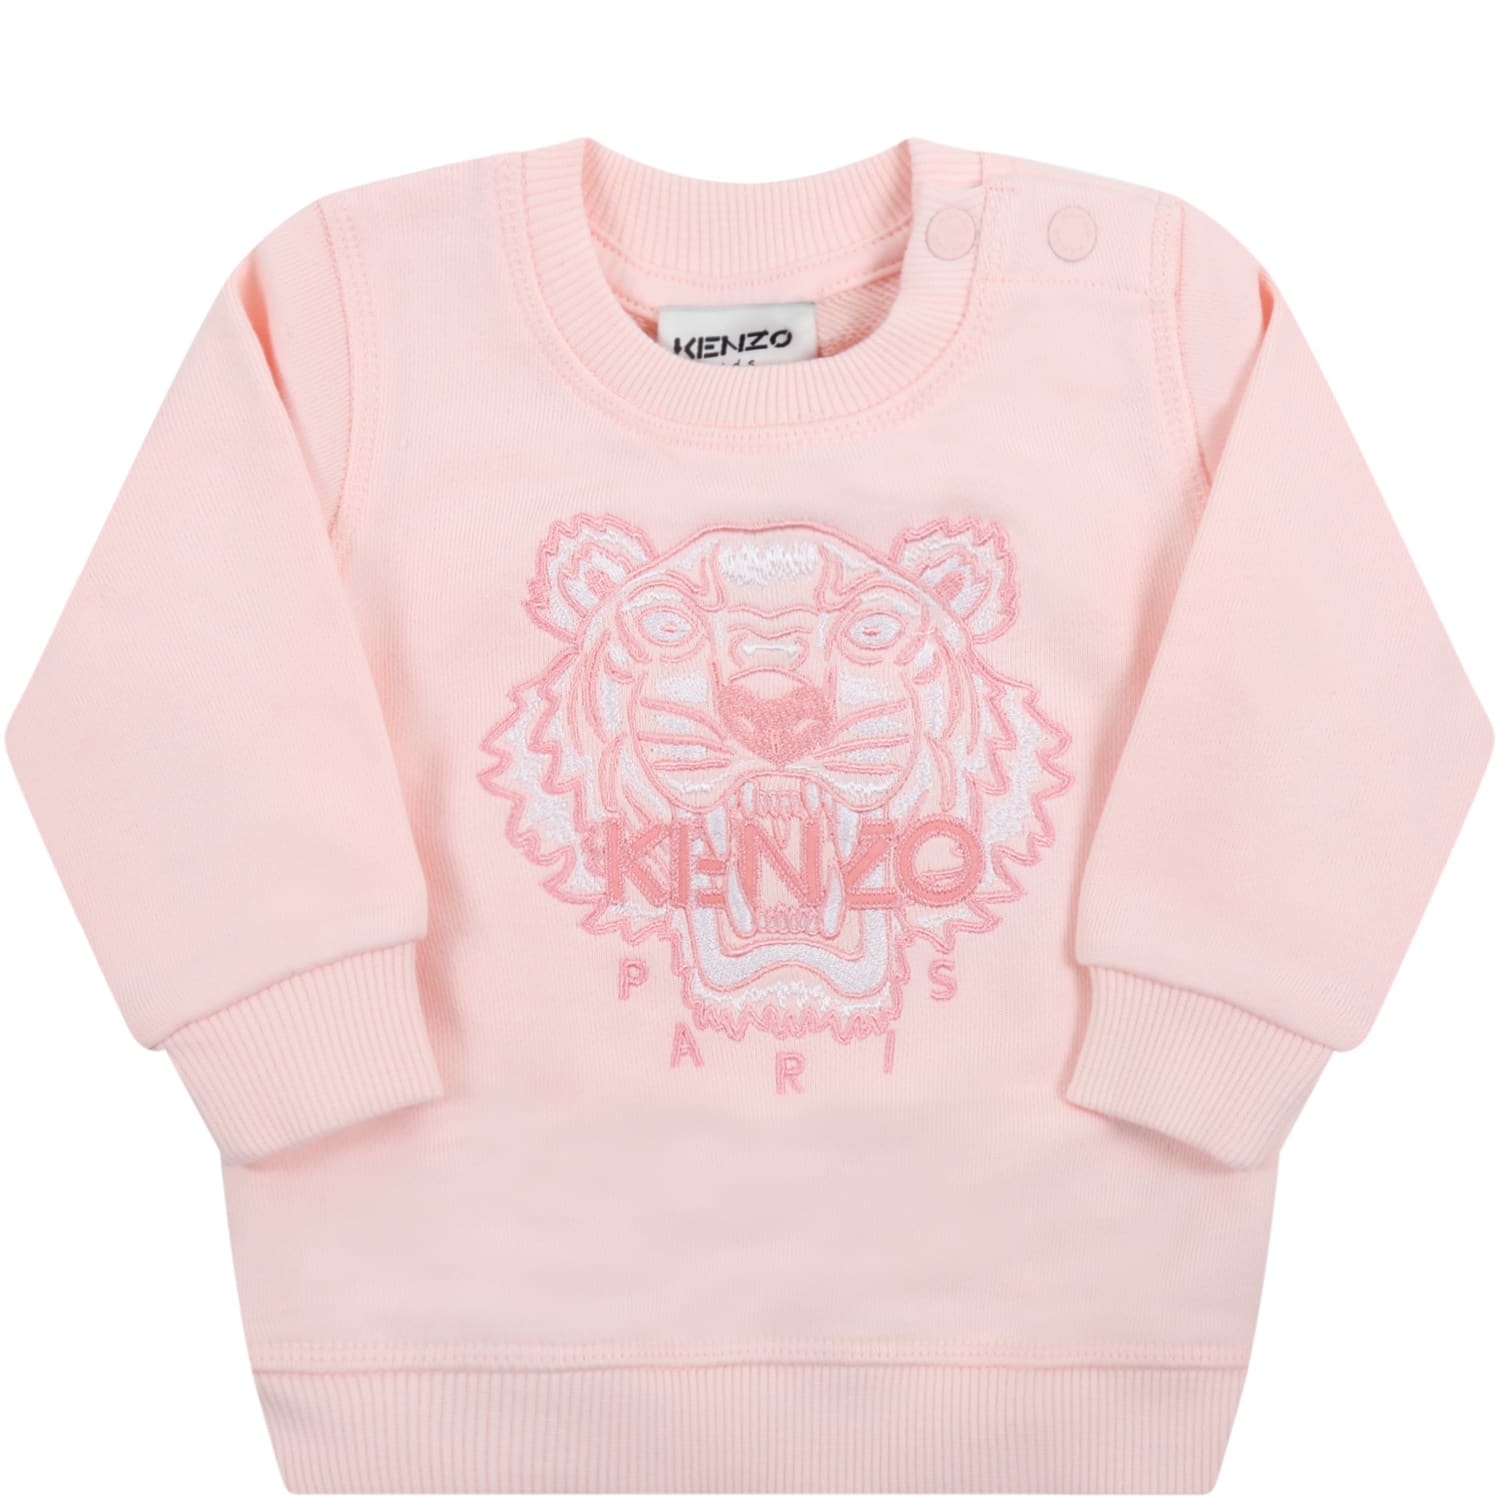 Kenzo Kids Pink Sweatshirt For Baby Girl With Tiger